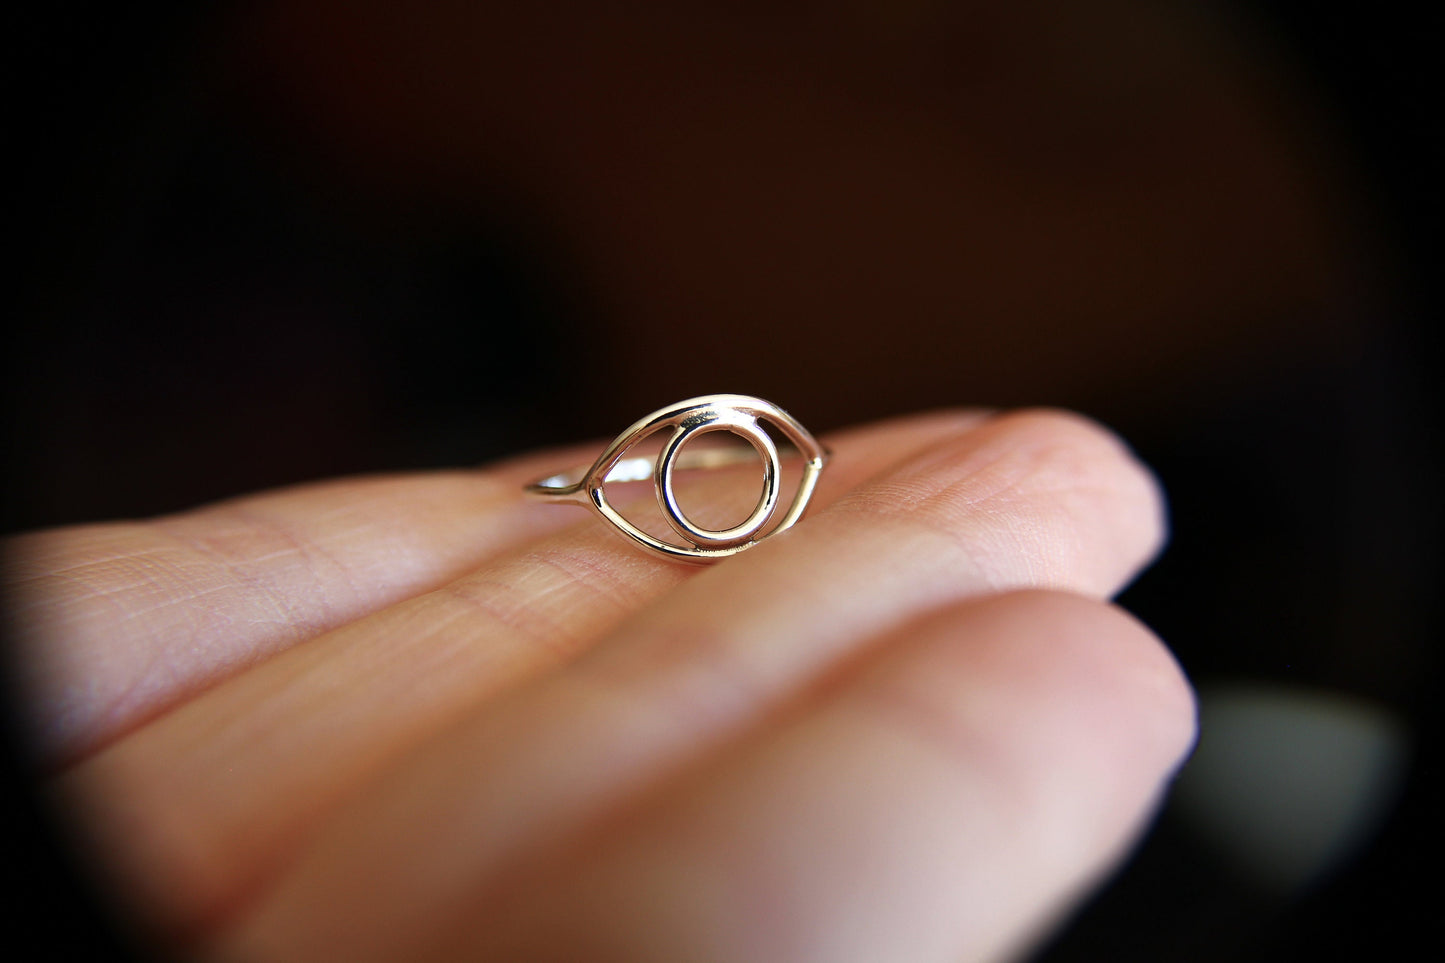 Simple Evil Eye Ring, Minimalist Evil Eye Stacking Ring, Sterling Silver Evil Eye Ring, Minimalist Evil Eye Ring, Silver Evil Eye Ring, Gift